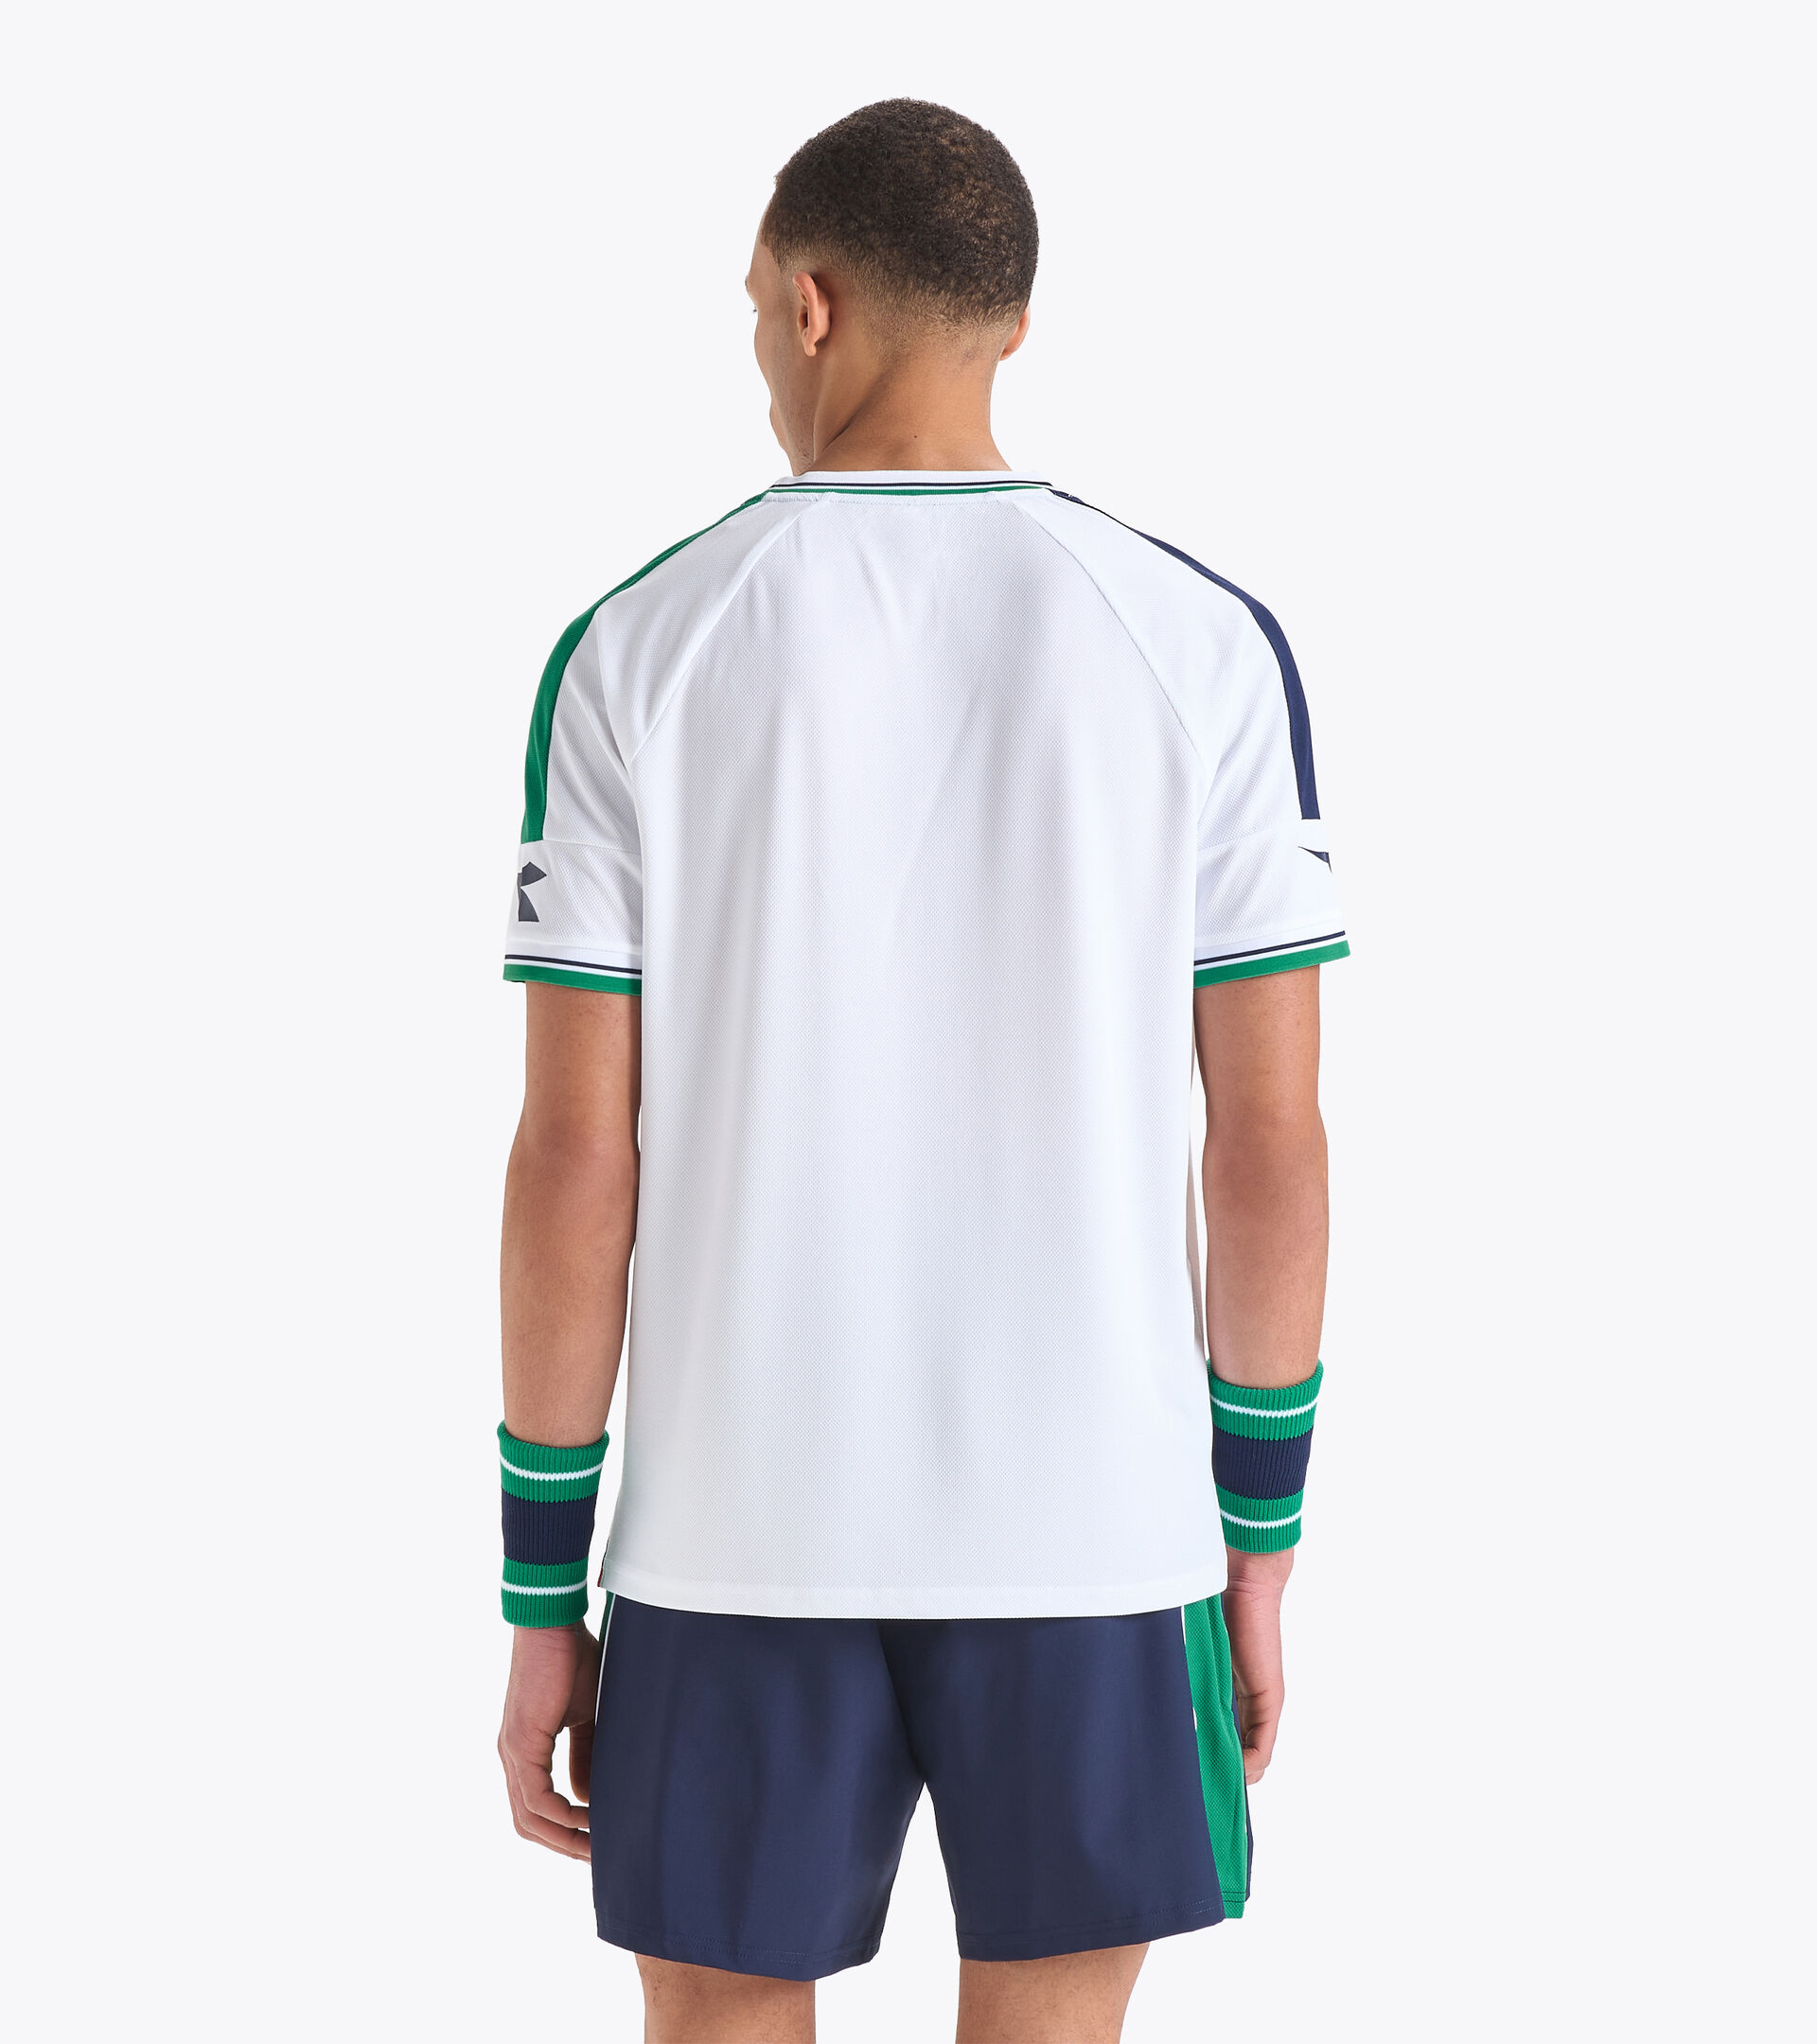 T-shirt da tennis - Uomo SS T-SHIRT ICON BIANCO OTTICO - Diadora